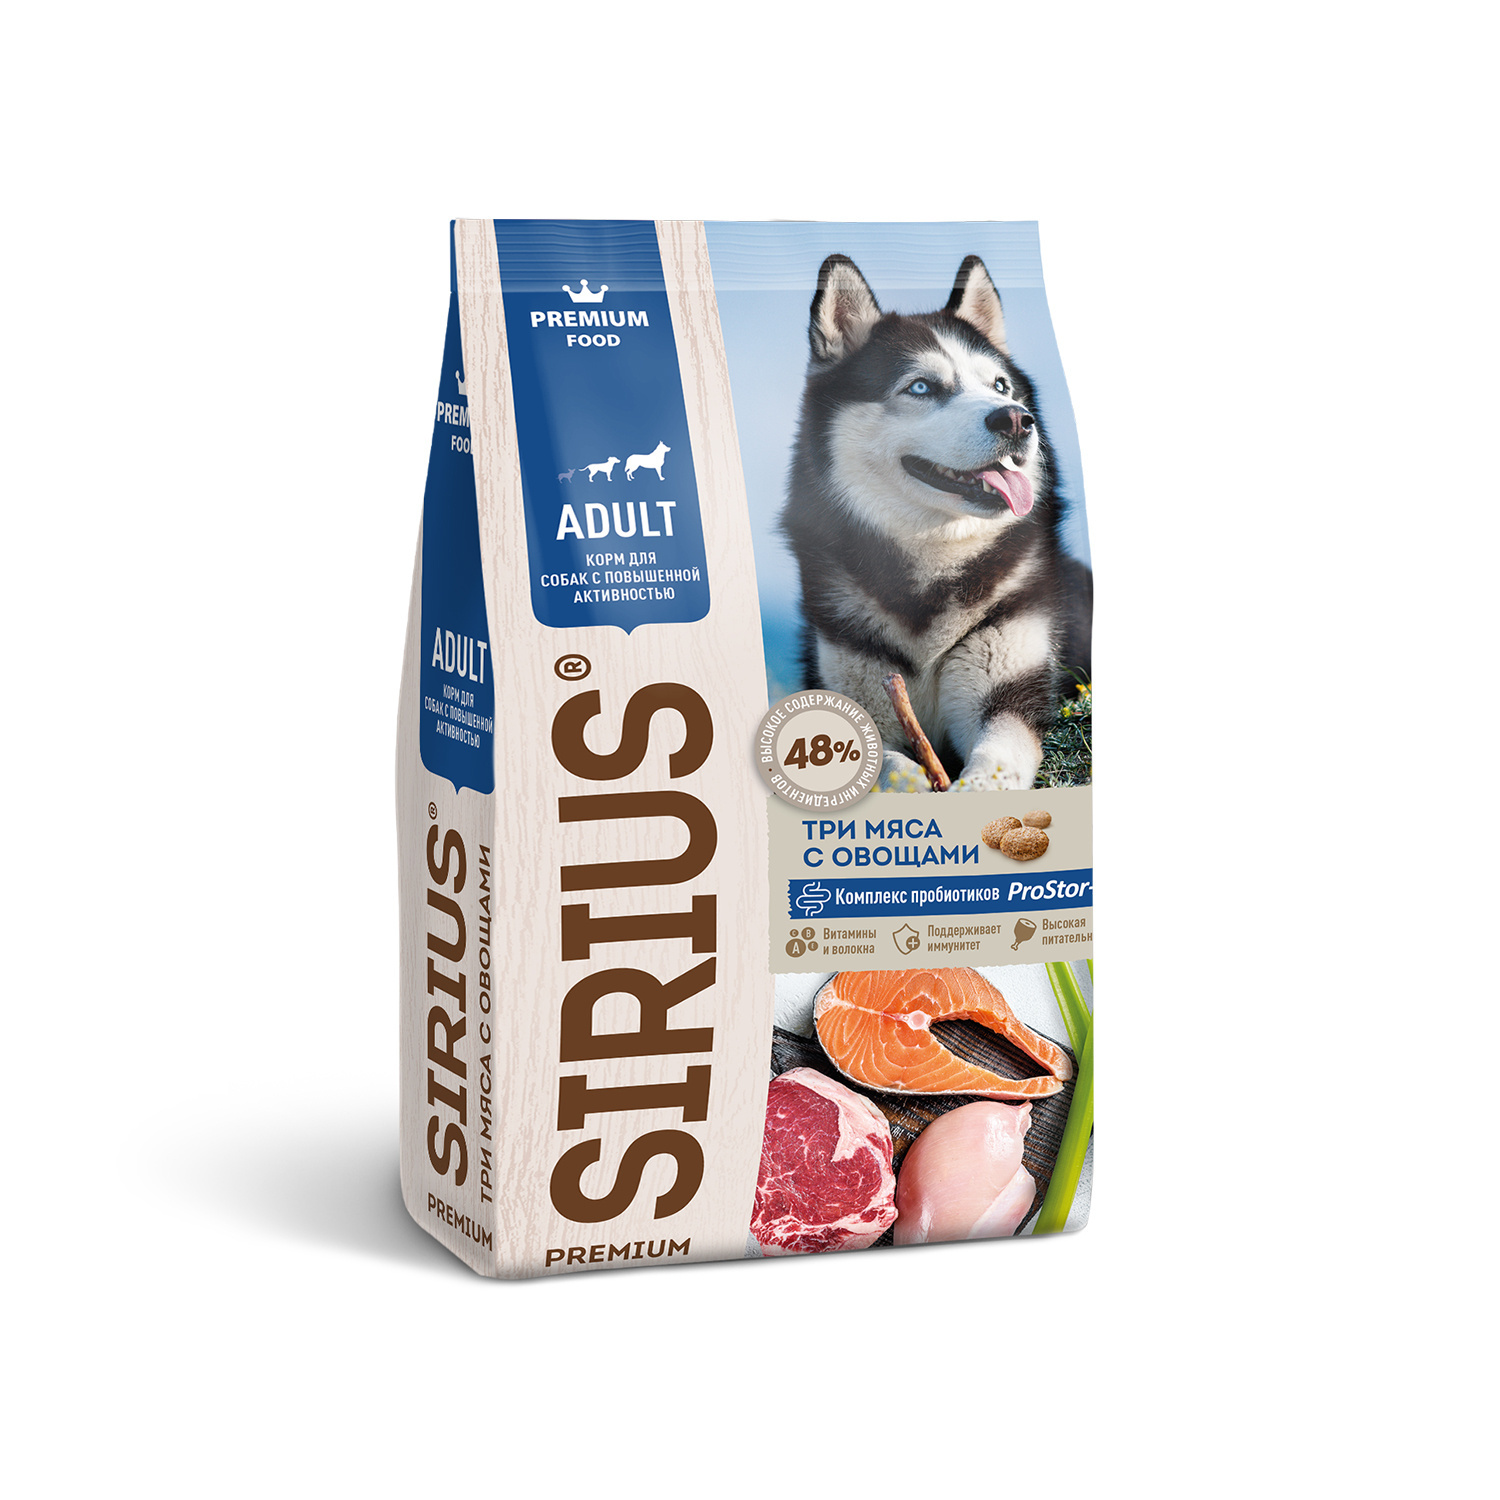 Sirius Sirius сухой корм для собак с повышенной активностью, три мяса с овощами (2 кг) sirius sirius сухой корм для собак говядина с овощами 2 кг